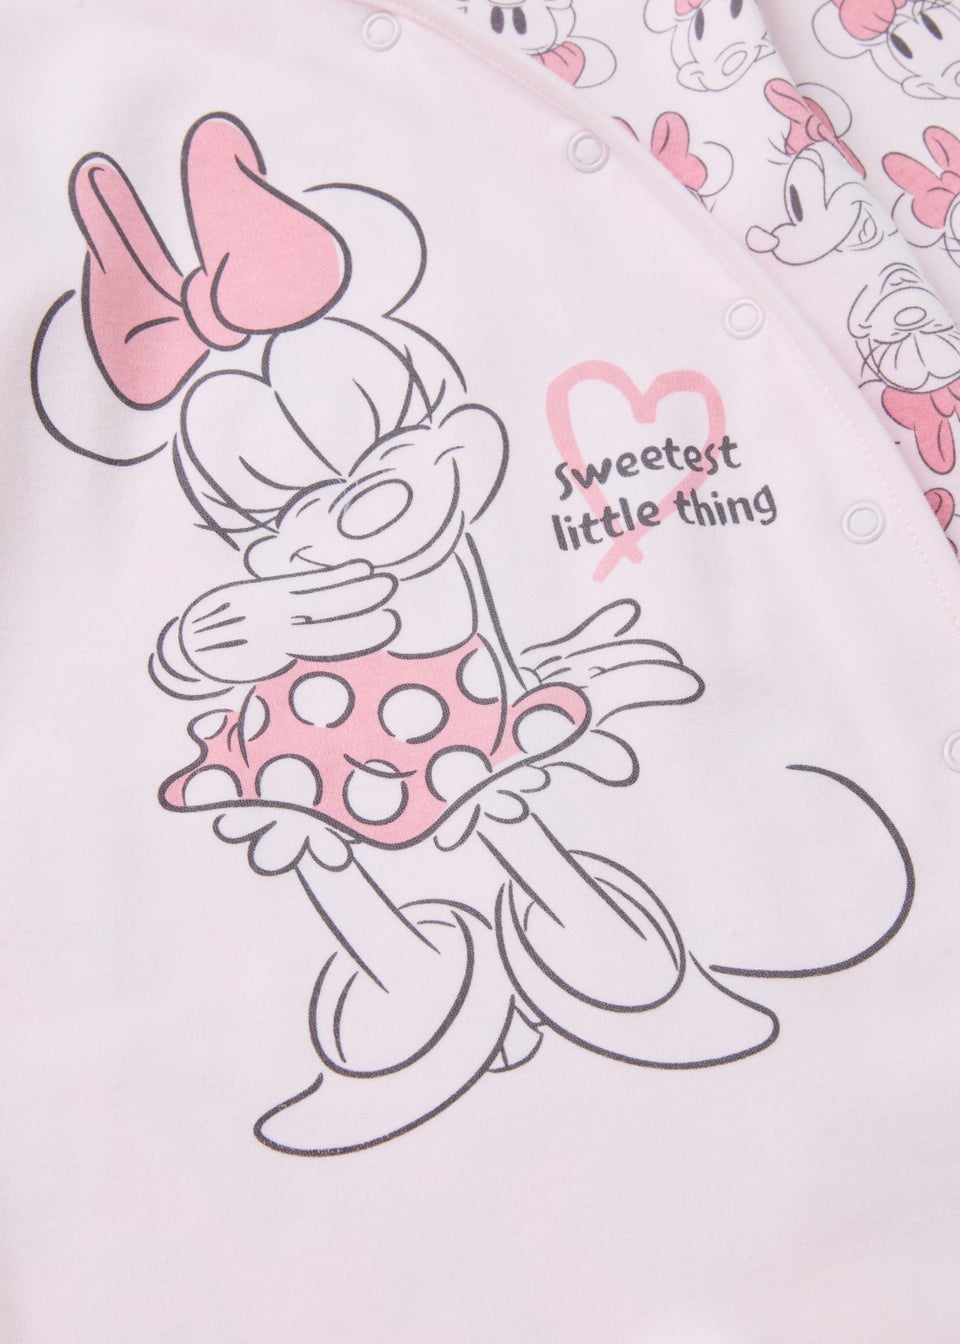 Baby Pink Minnie Mouse Print Sleepsuit (Newborn-12mths)